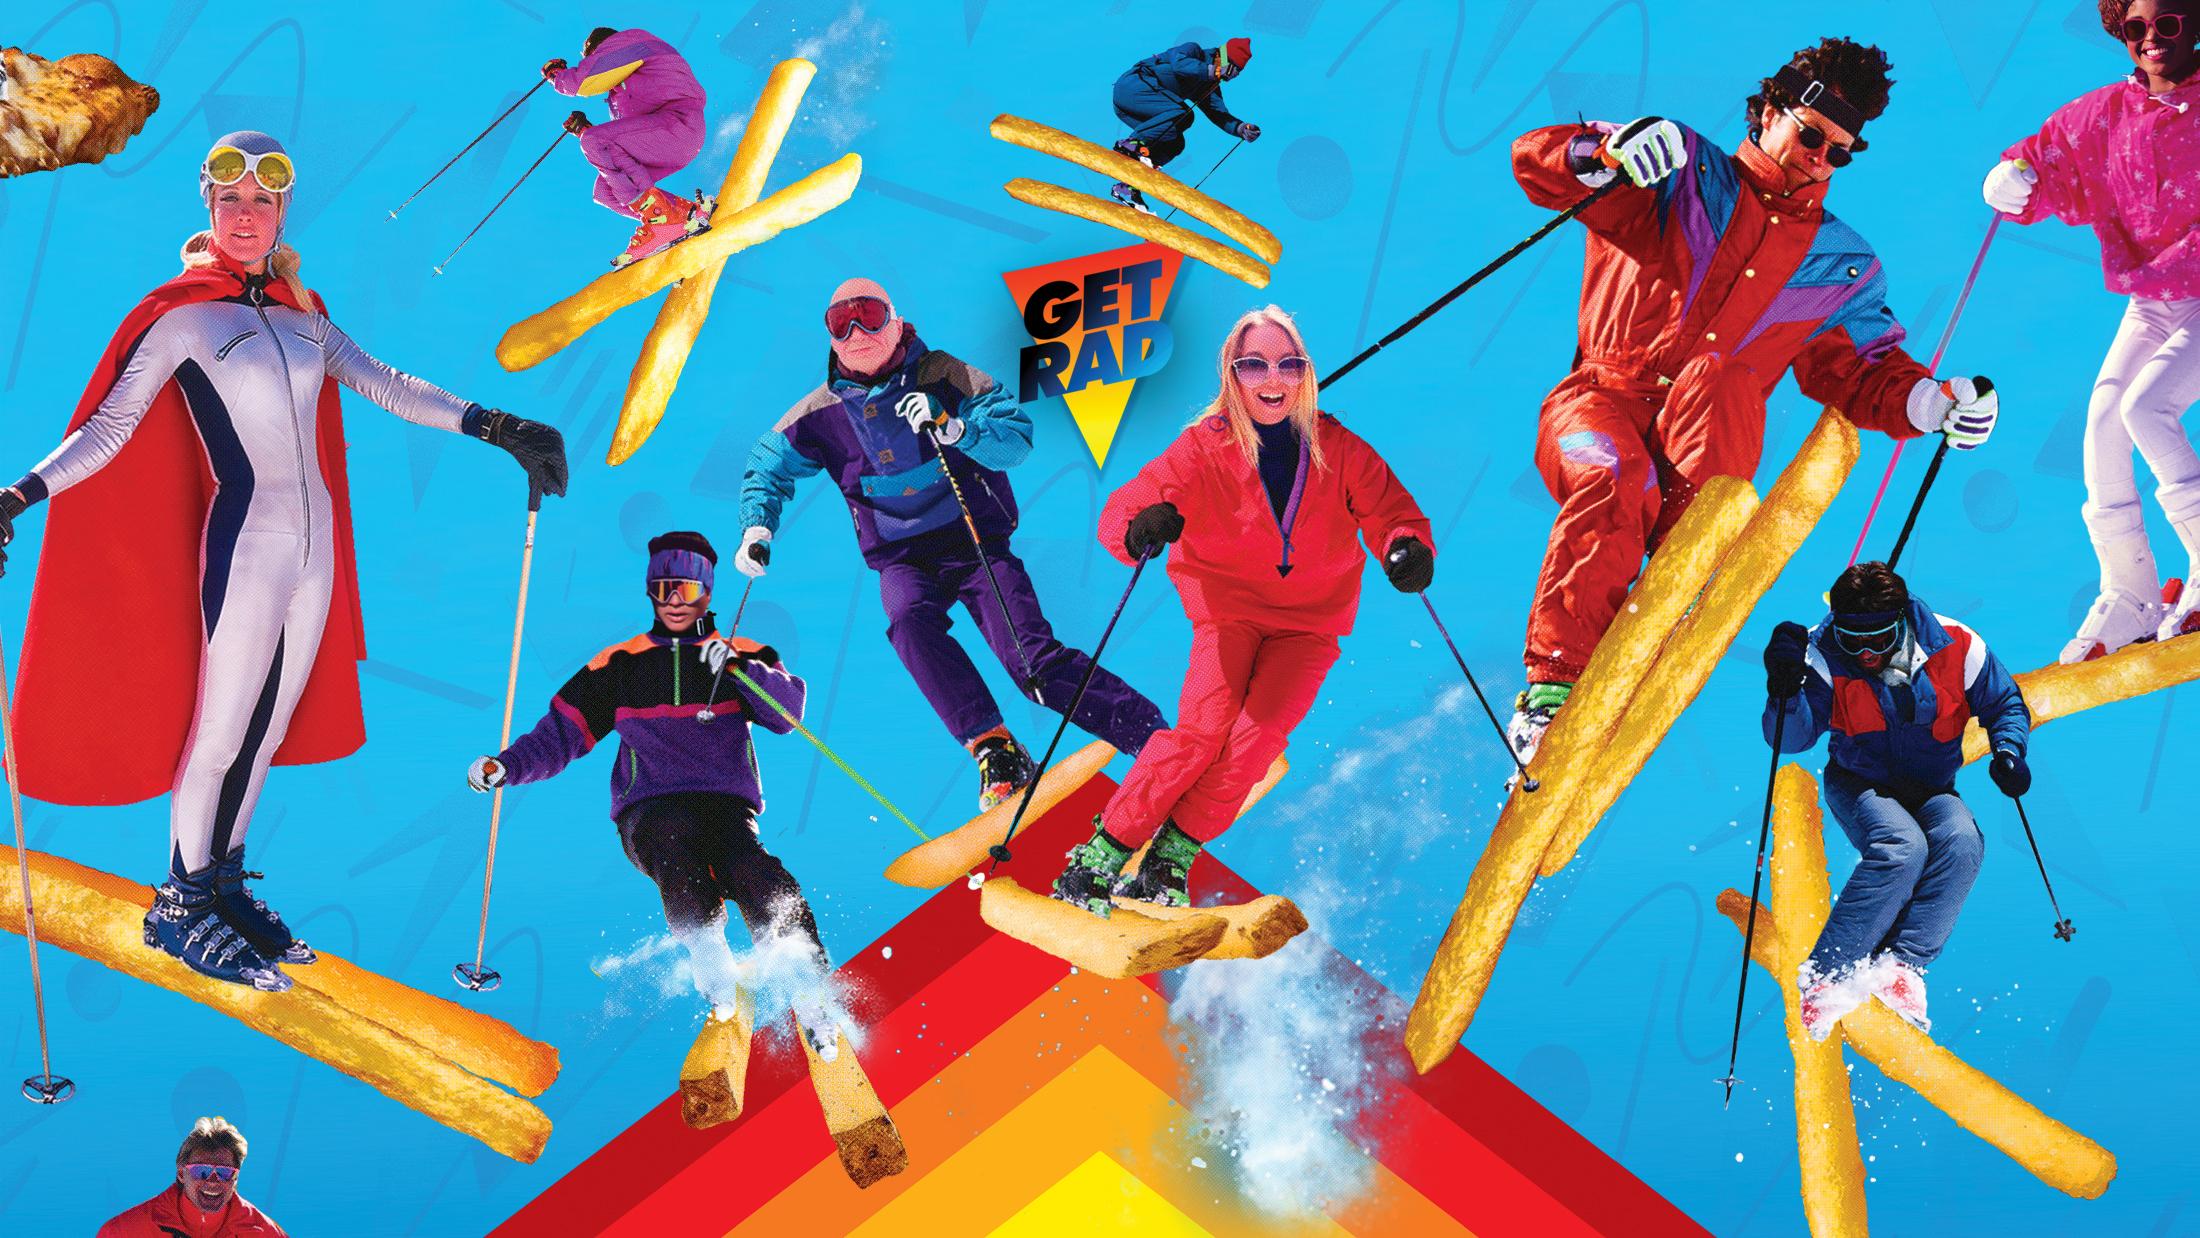 The Hotshot "GET RAD" Alyssa Parsons & Uncle Mike x J Collab Limited Edition Ski Shredding Image